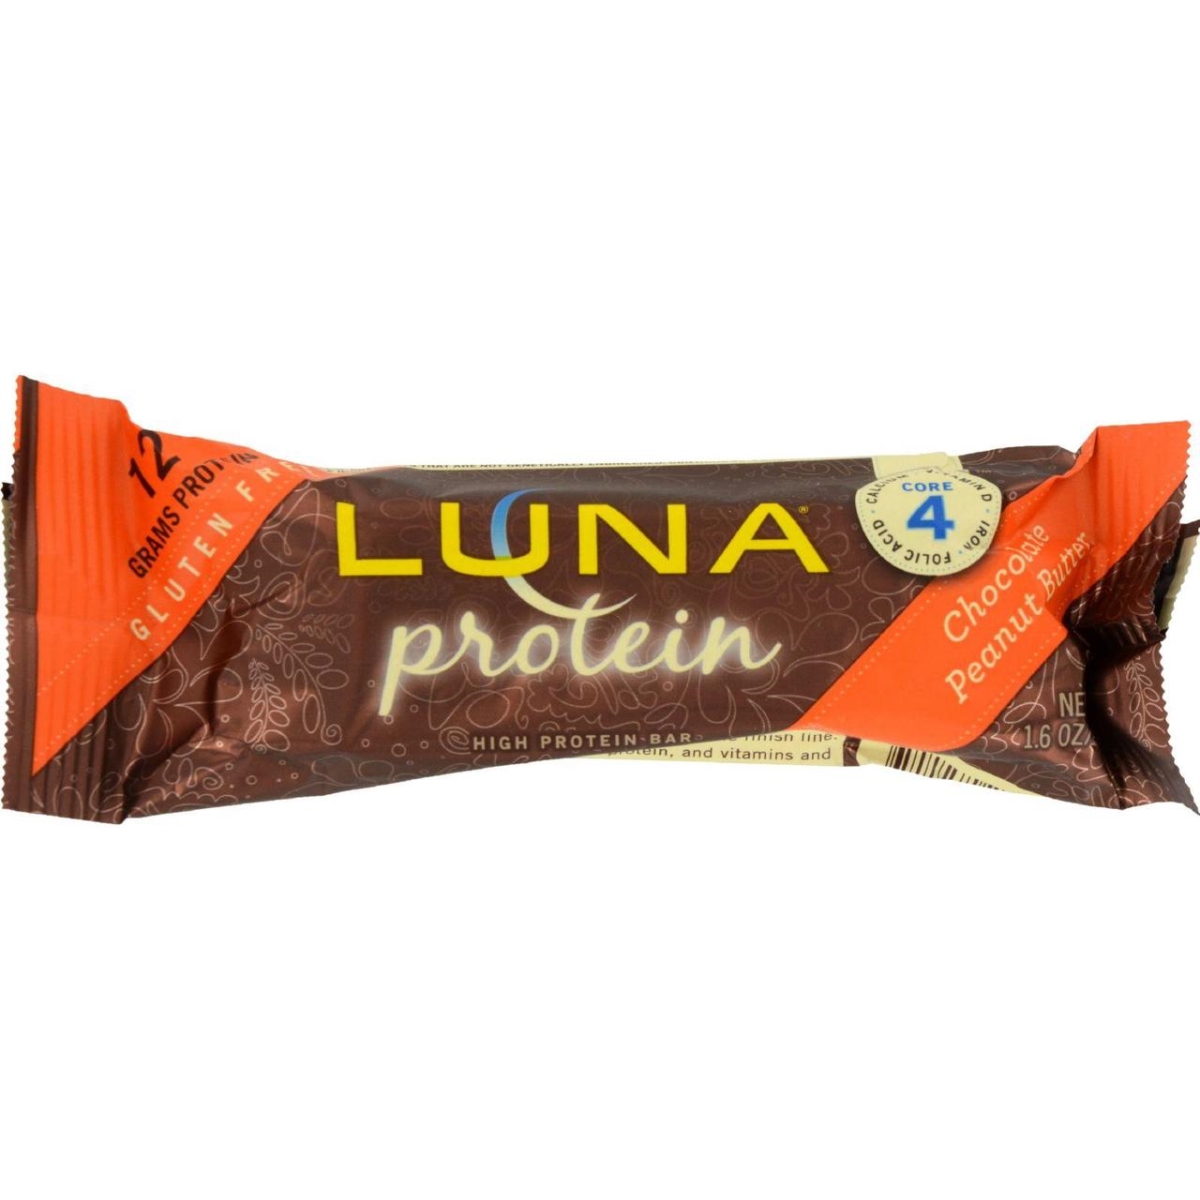 Clif Bar Hg0117531 1.59 Oz Chocolate Peanutbutter Luna Protein Bar - Case Of 12